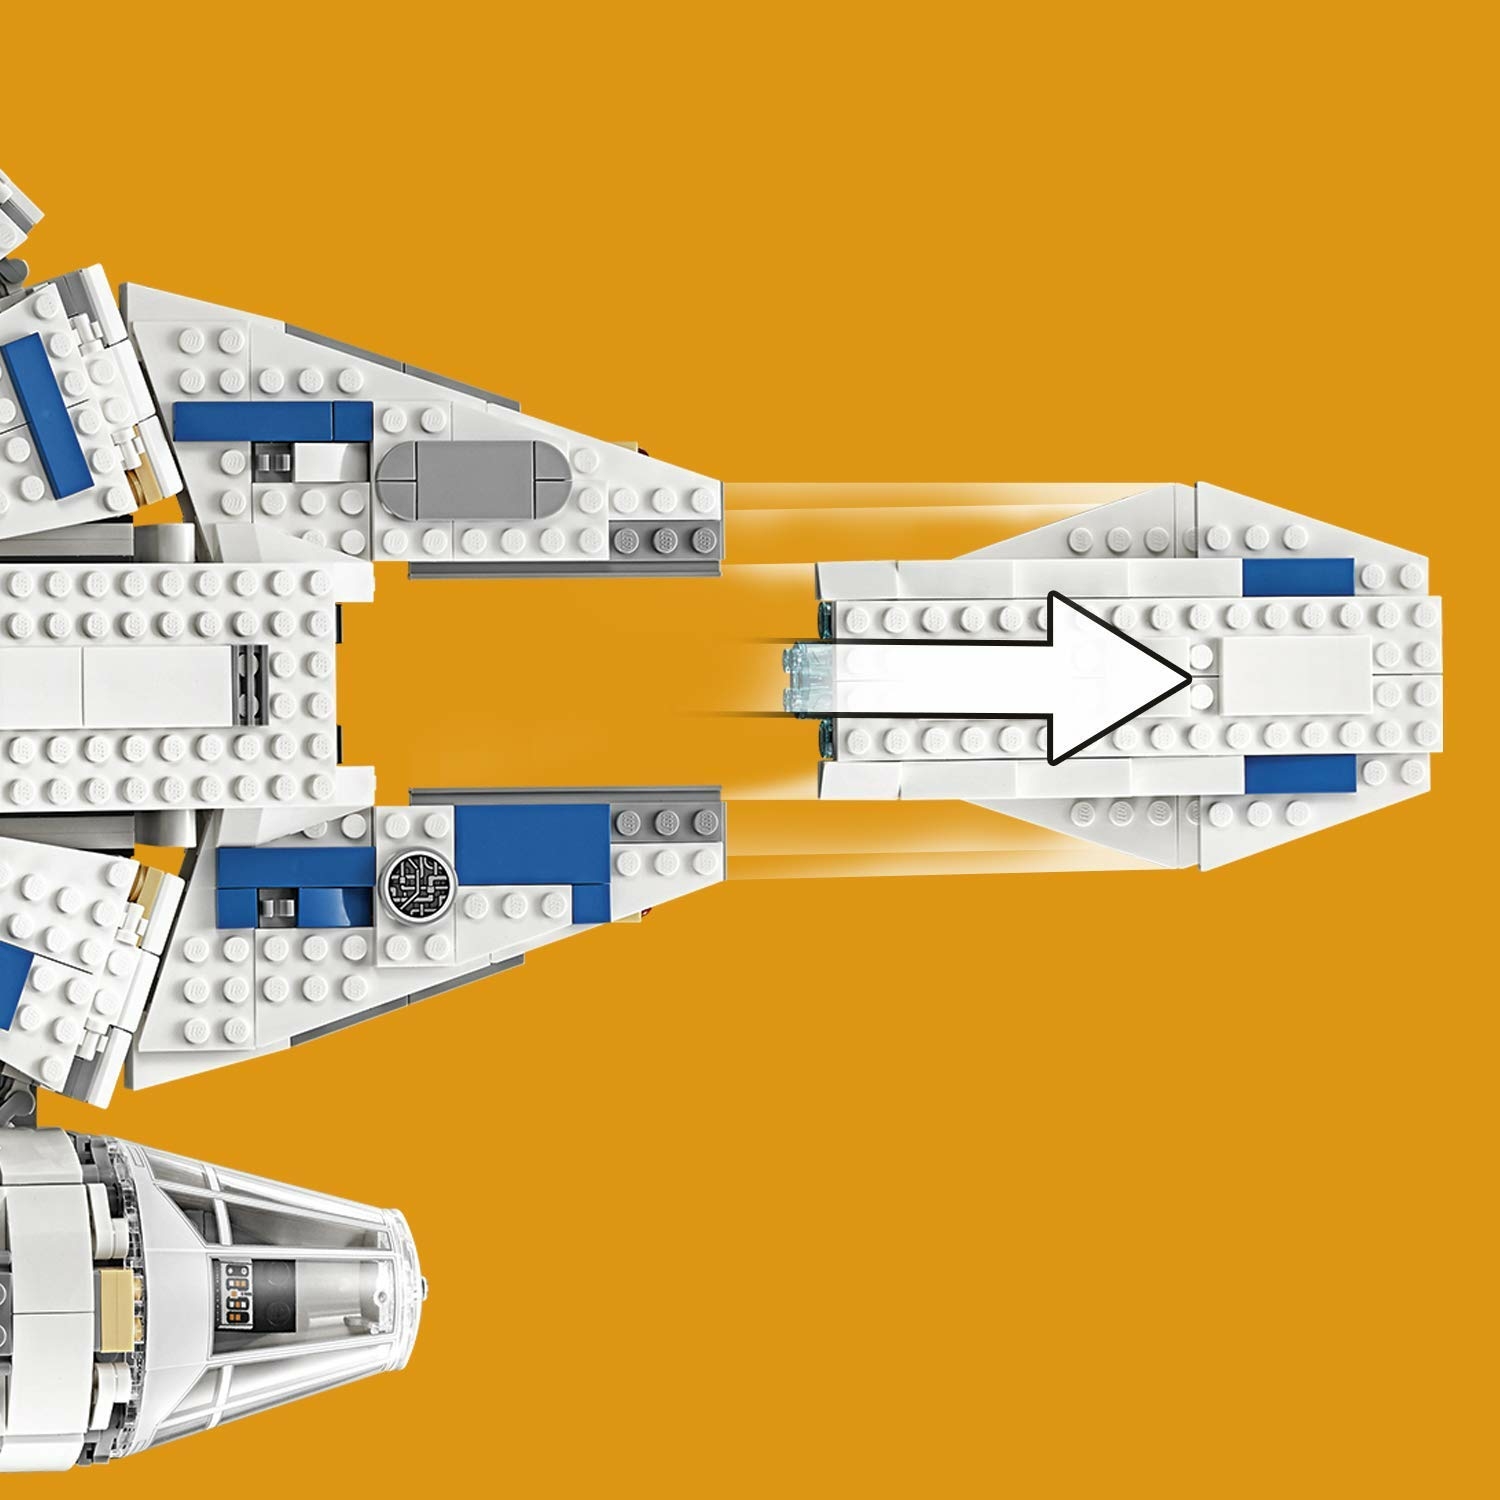 Lego Star Wars 75212 Le Faucon Millenium de Kessel Run